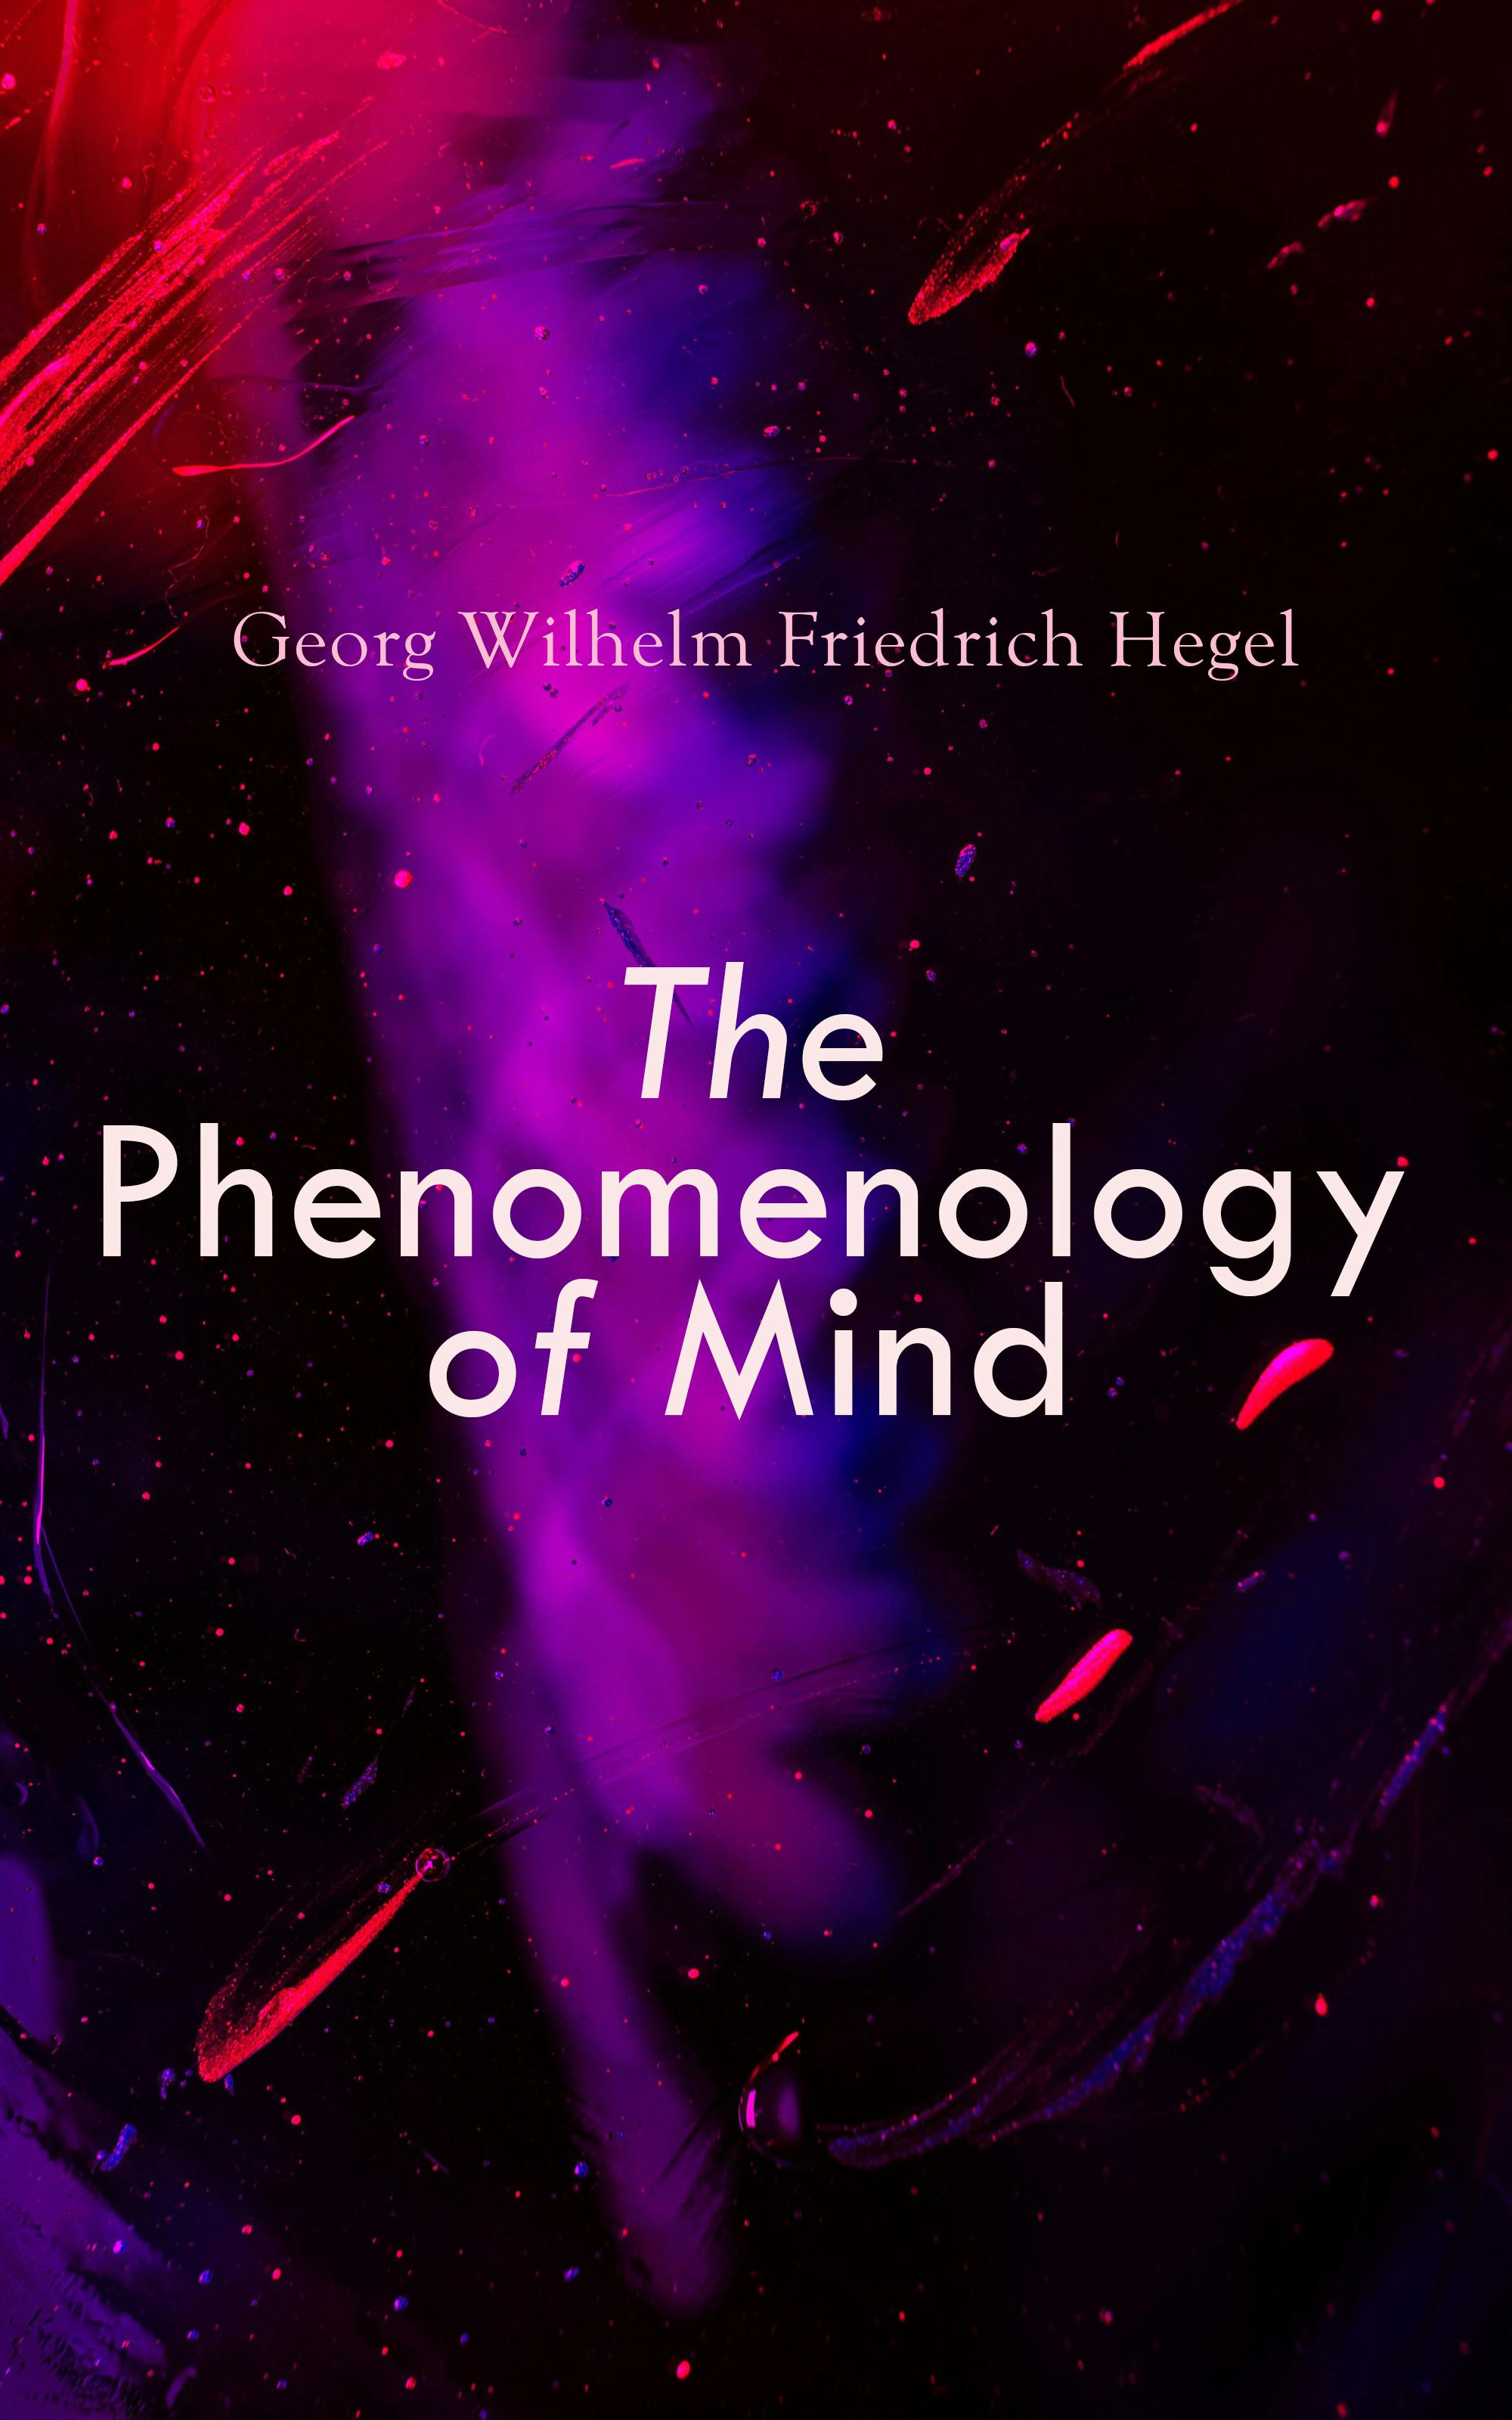 The Phenomenology of Mind: System of Science - Georg Wilhelm Friedrich Hegel